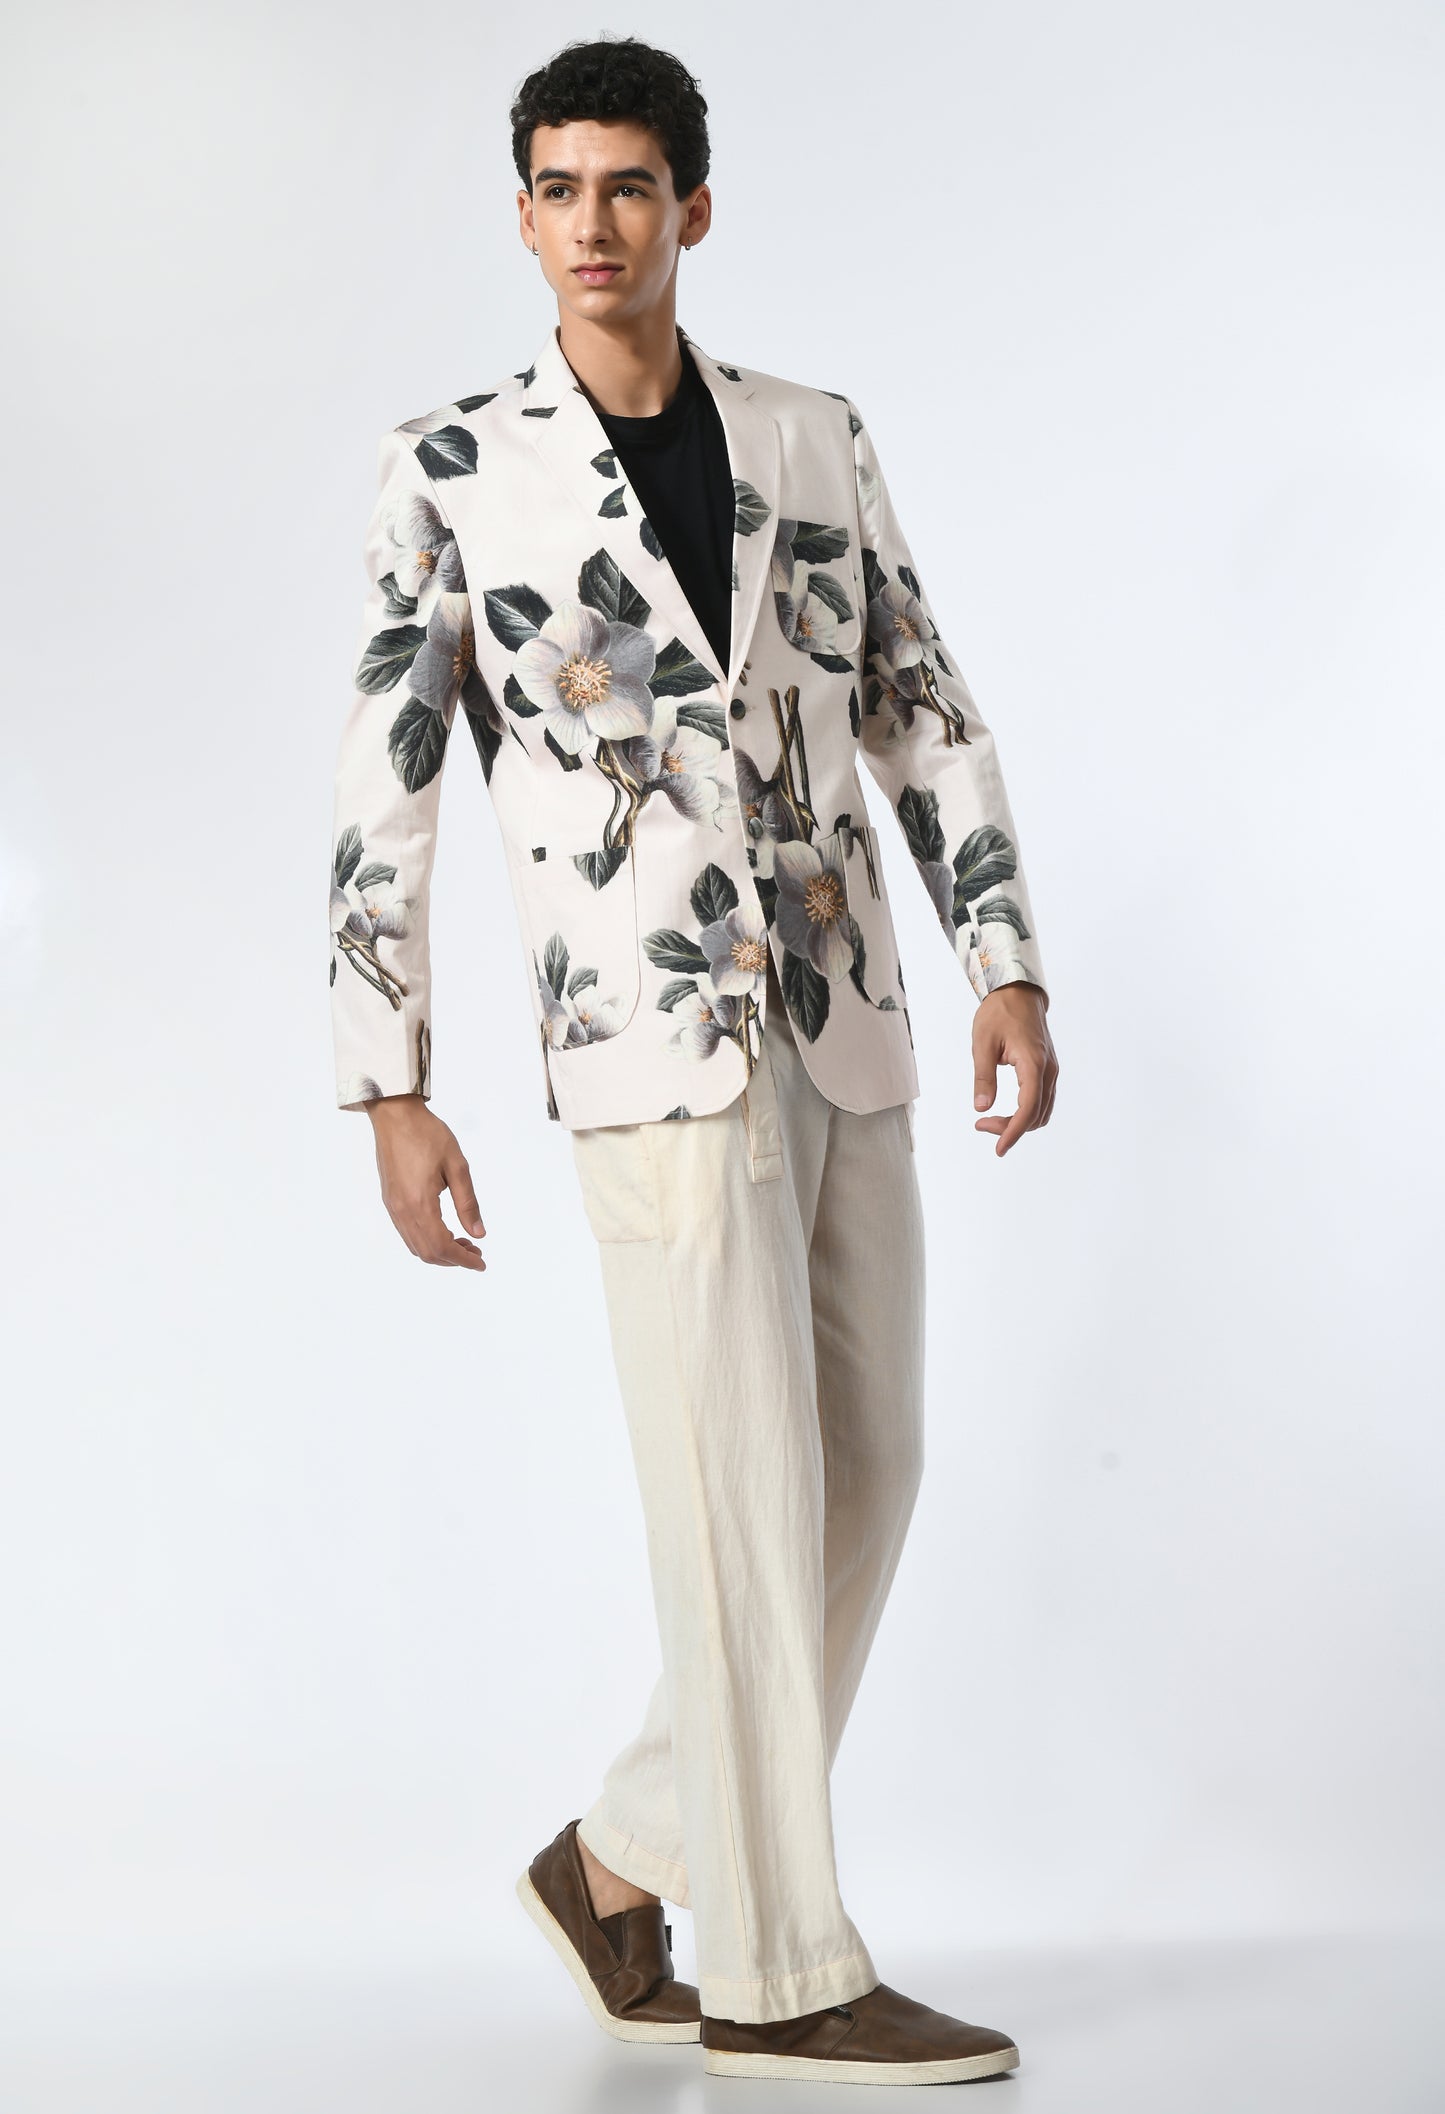 Men's blazer set with floral print.